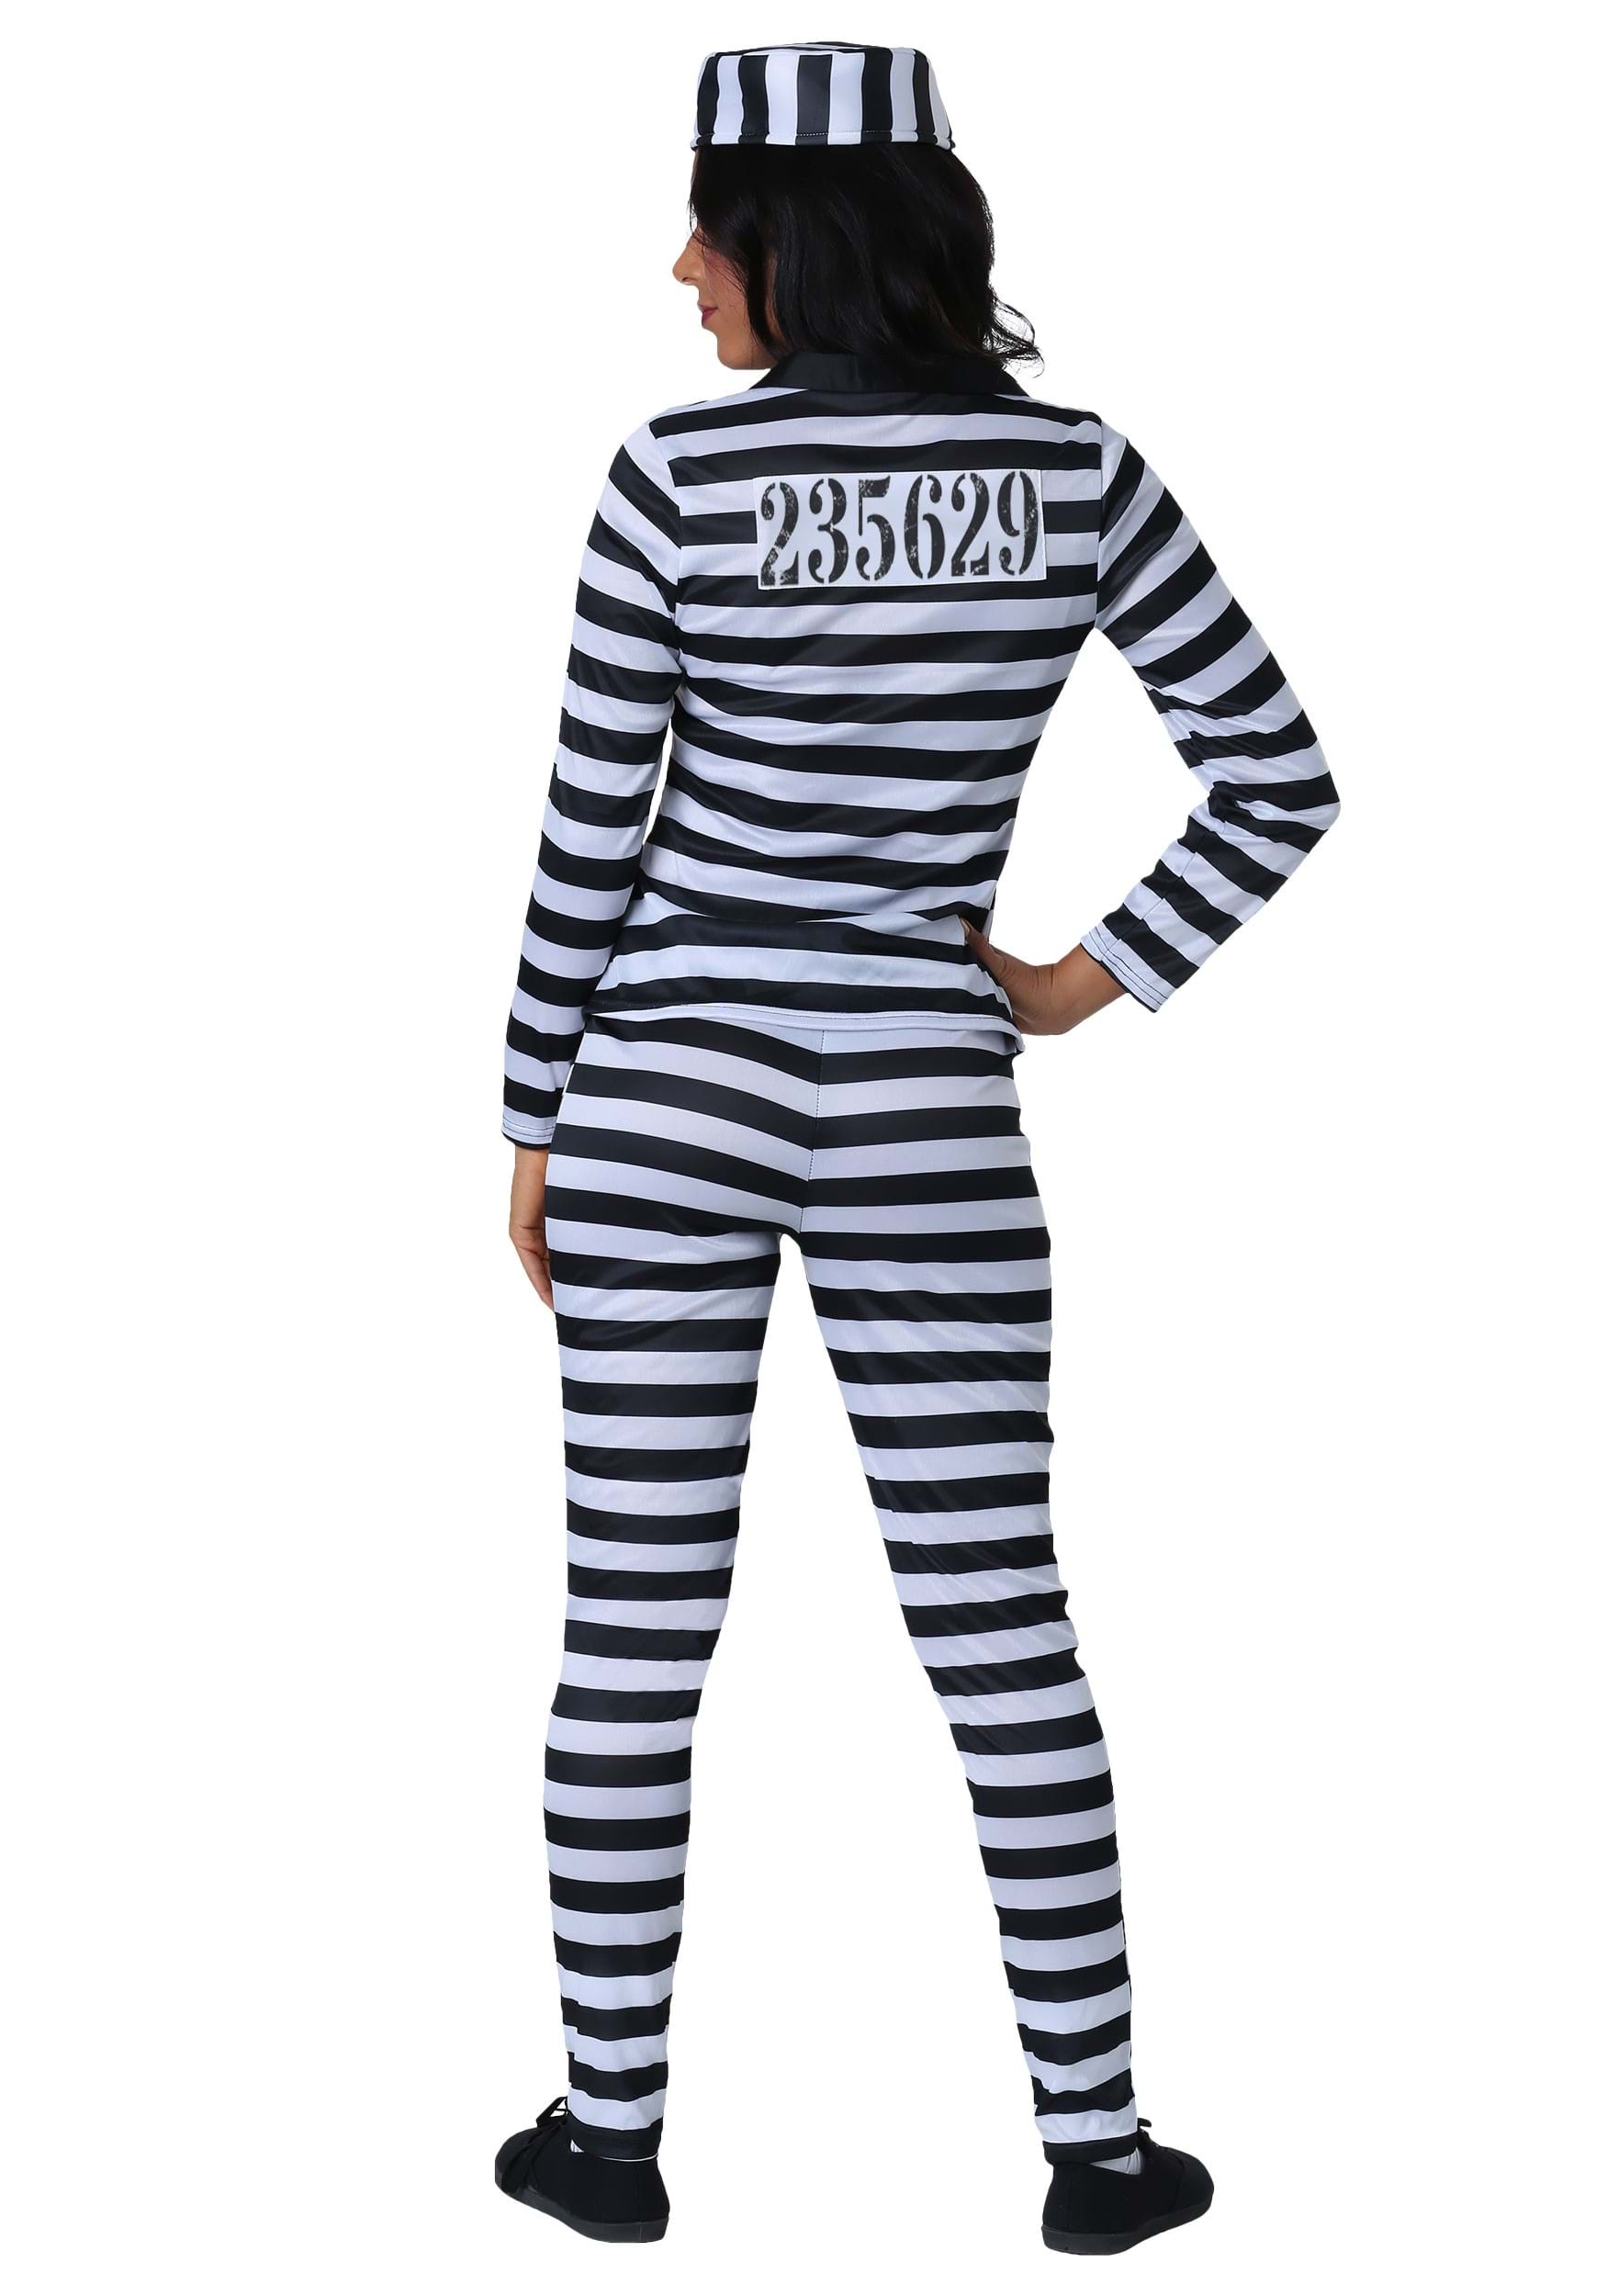 Incarcerated Cutie Costume For Women